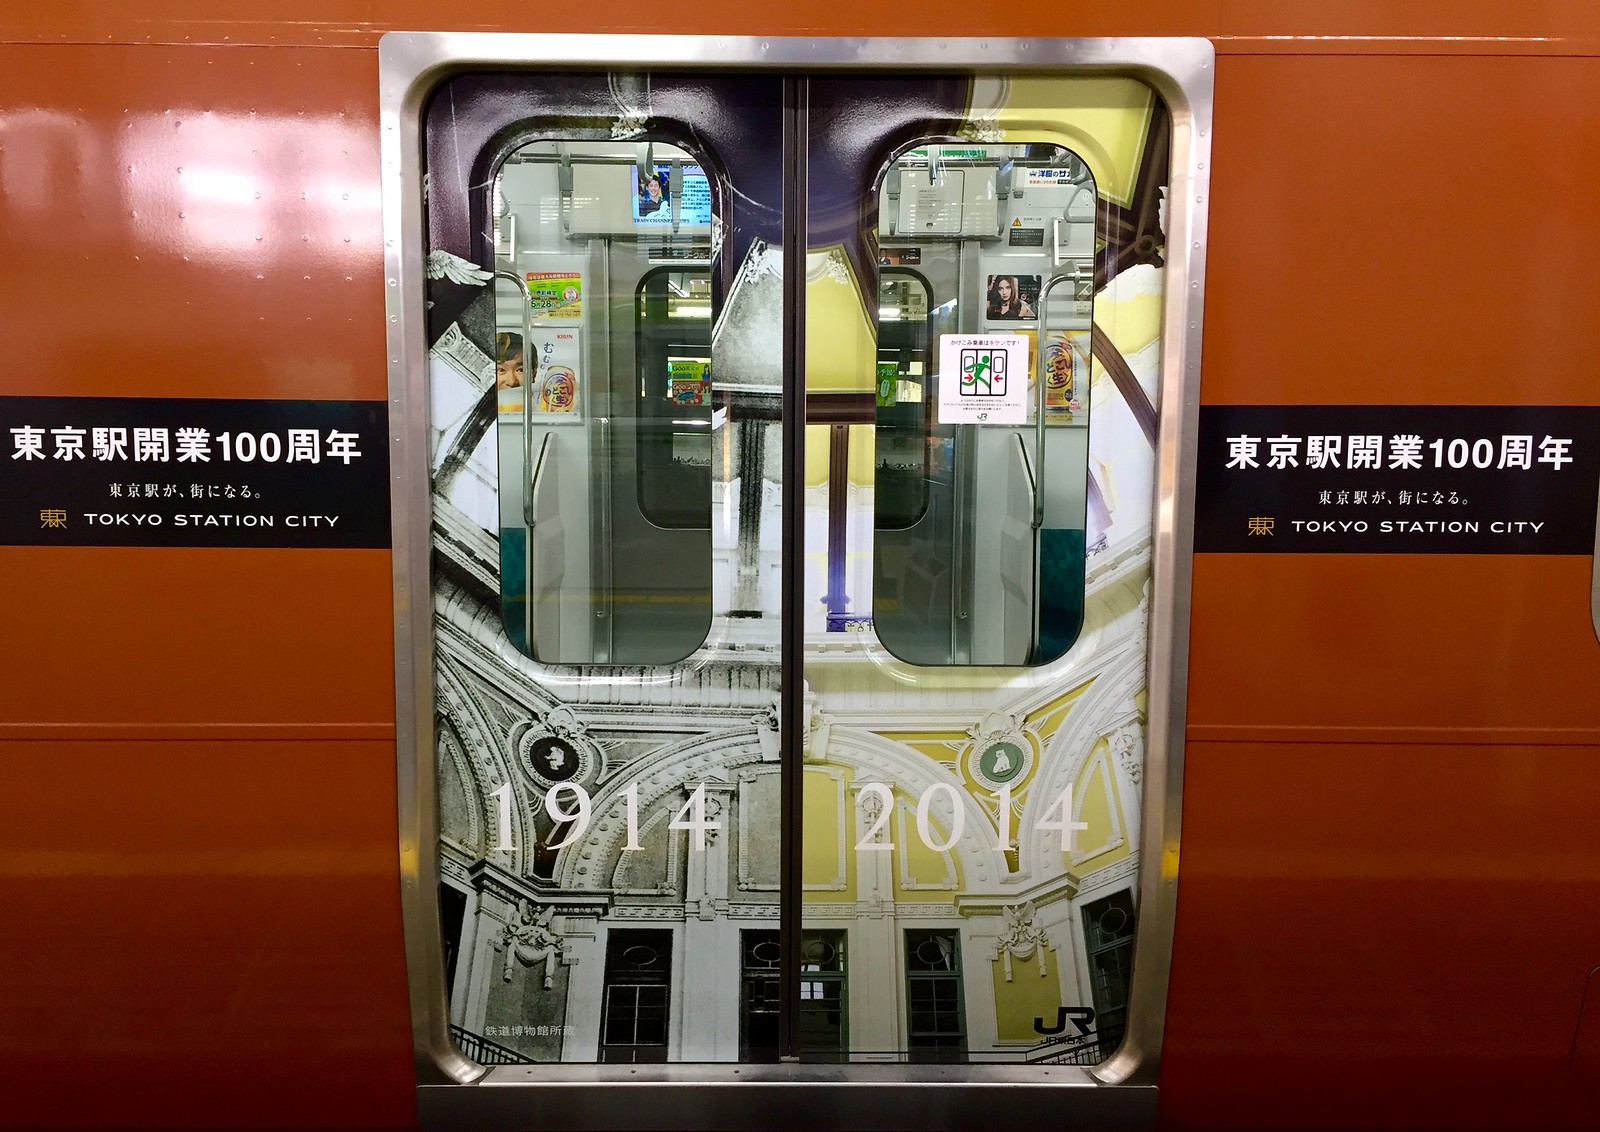 Yamanot Line Train in the 100 Year Tokyo Anniversary version